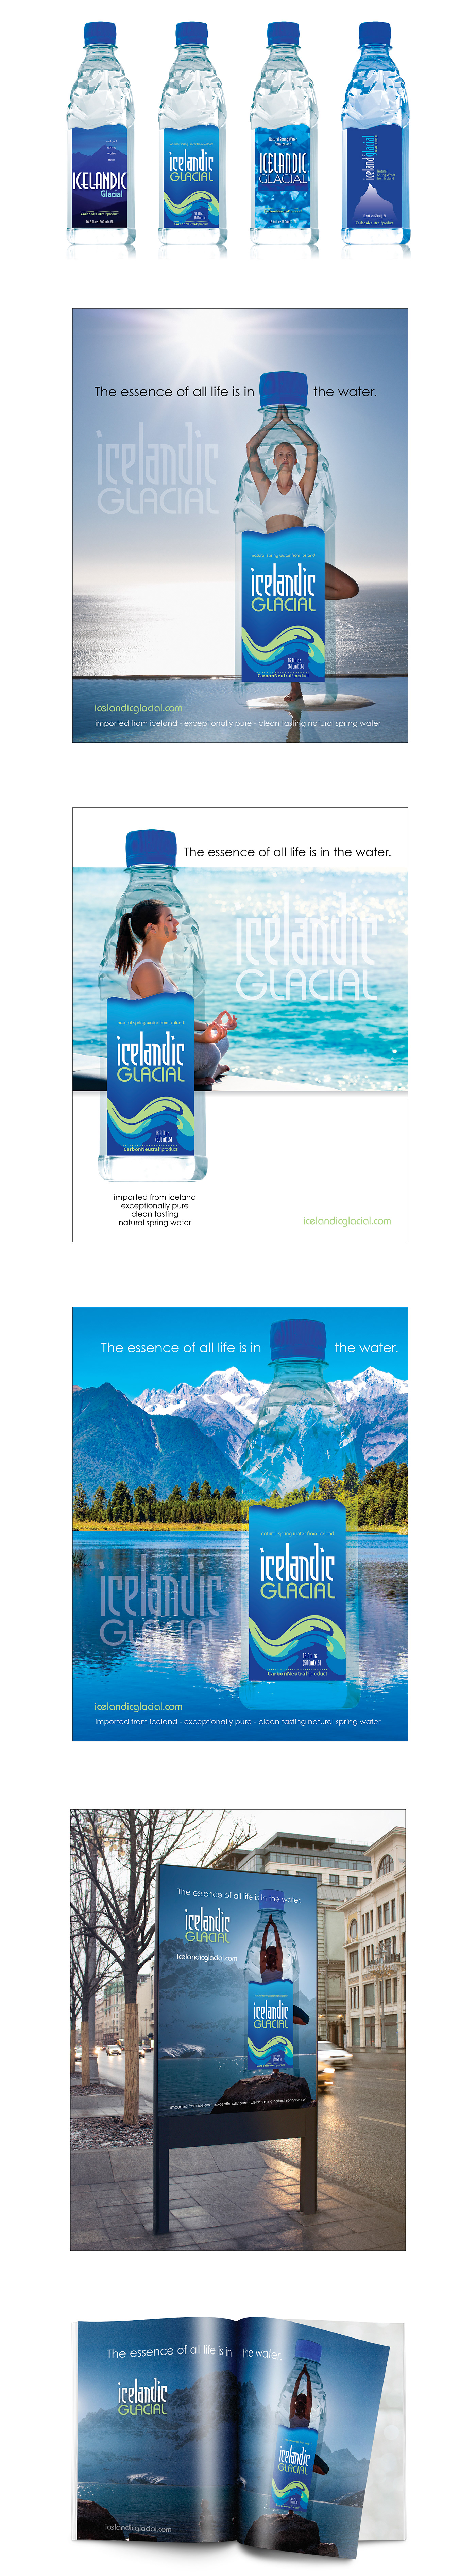 Icelandic Glacial logo design, label design and advertising campaign proposal